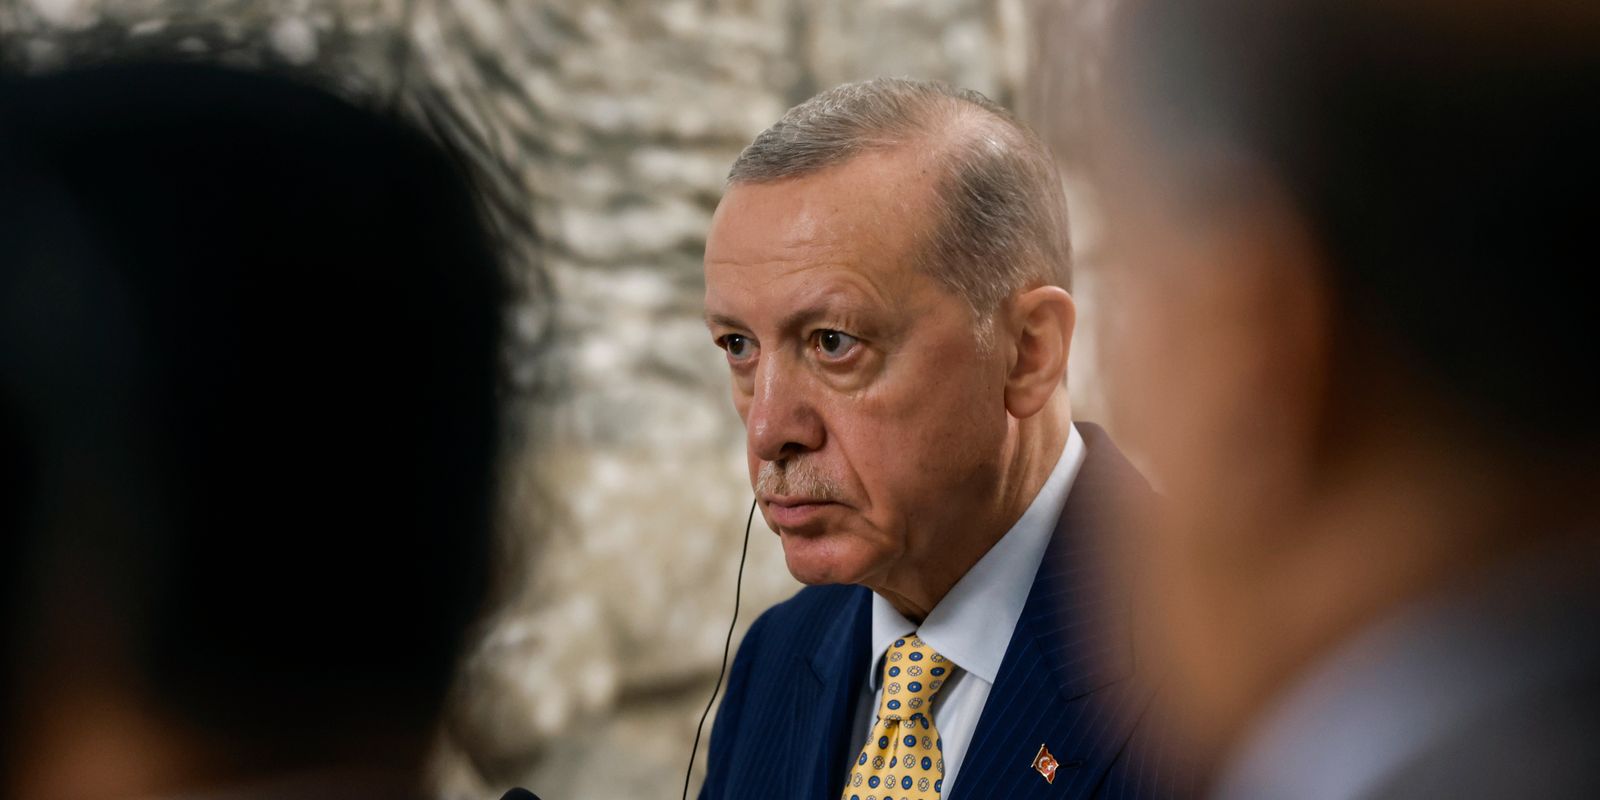 israel rasar mot turkiet – kallar erdogan ”diktator”